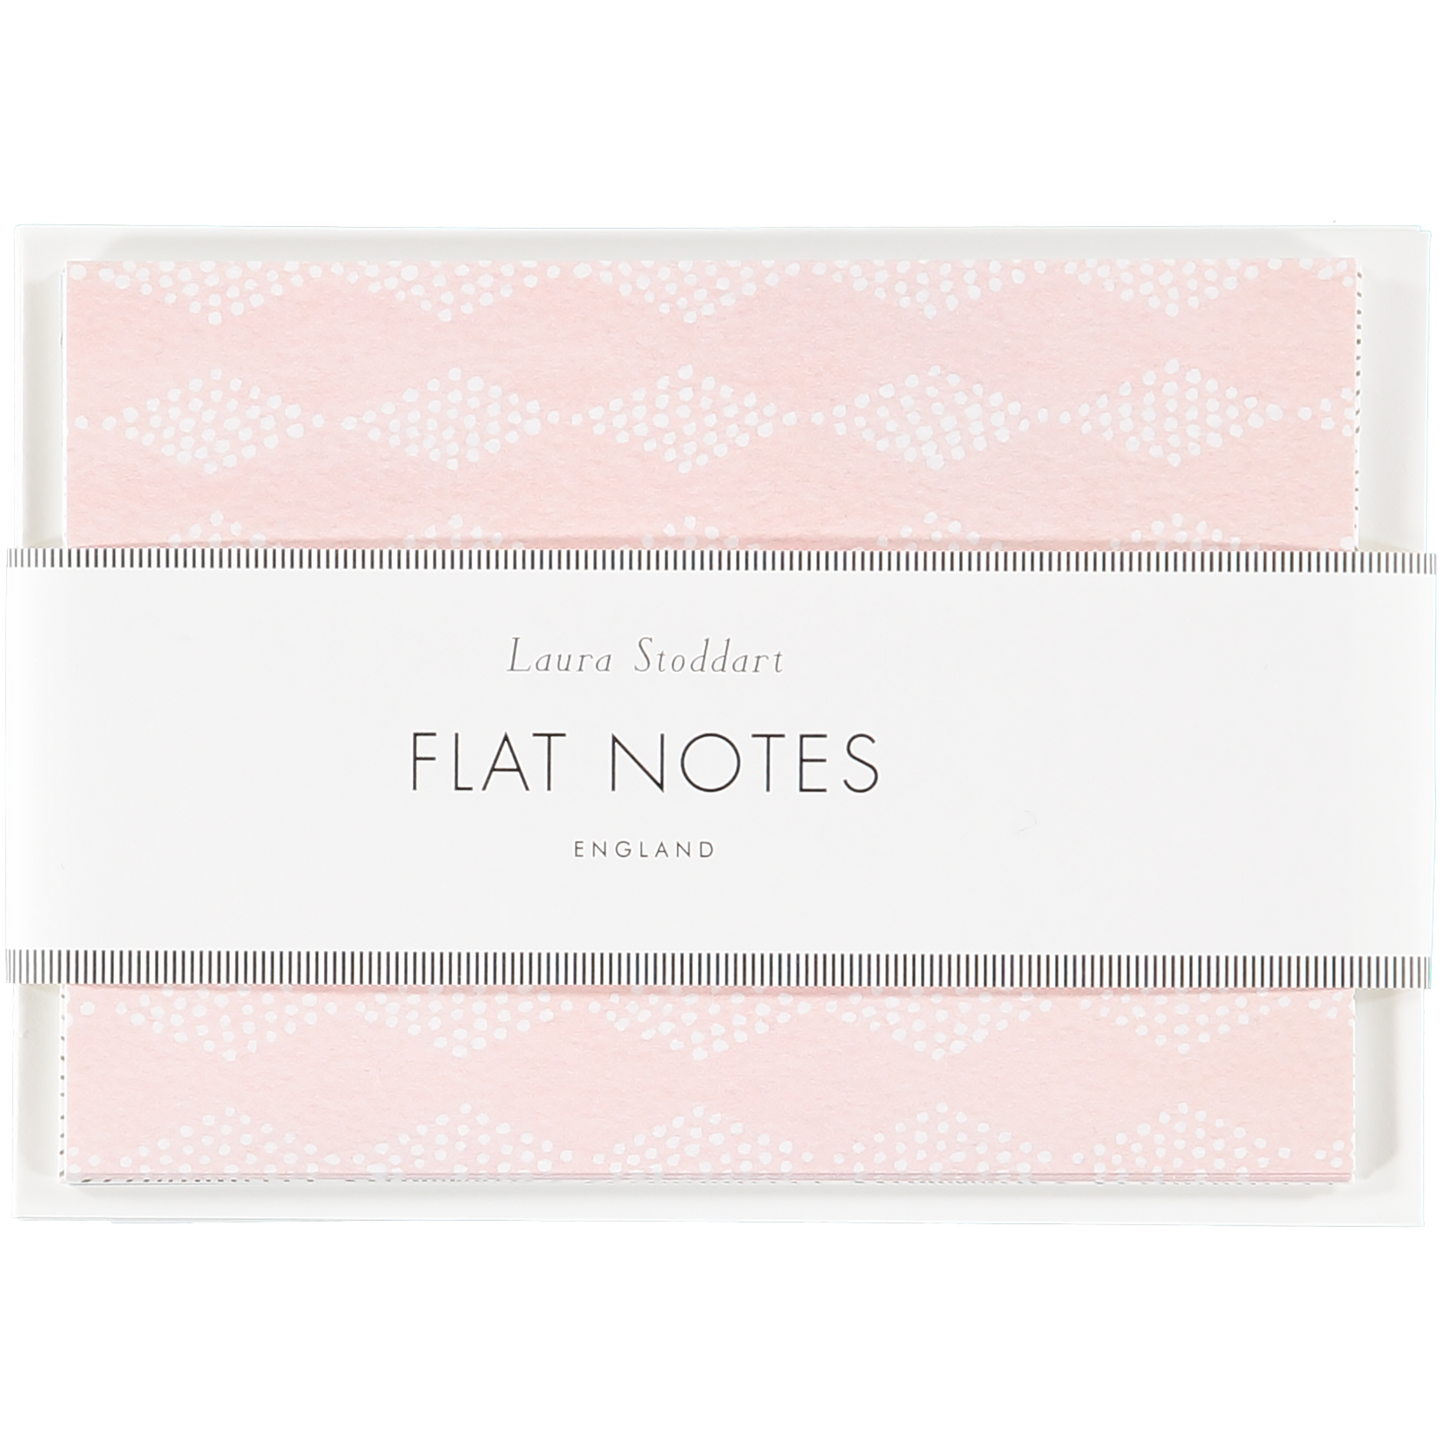 Pattern Play Flat Notes - Patterns - 30%